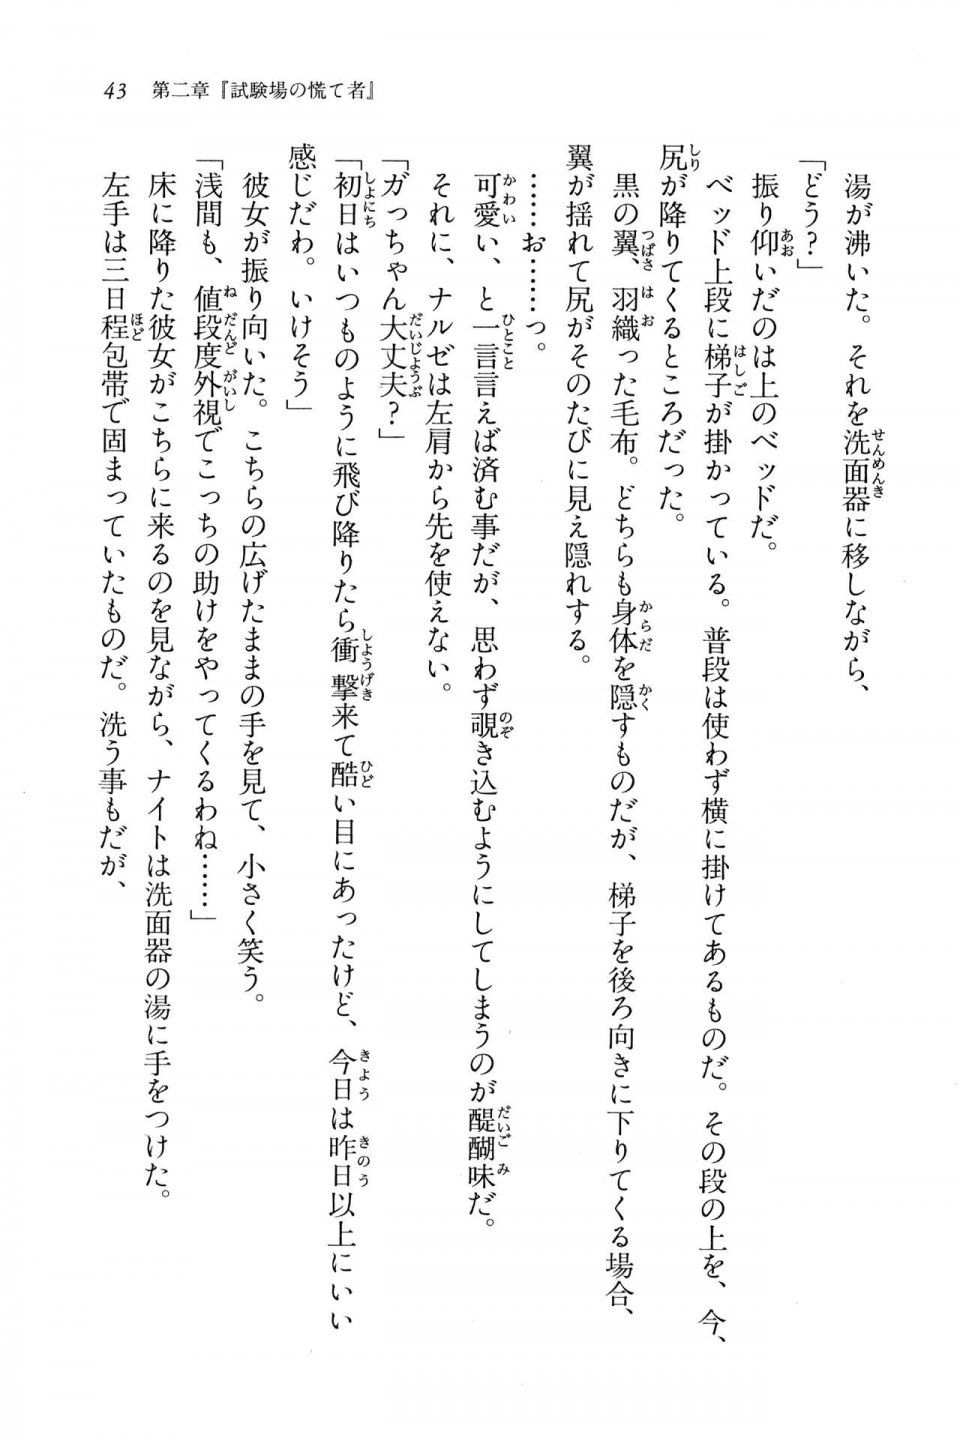 Kyoukai Senjou no Horizon BD Special Mininovel Vol 7(4A) - Photo #47